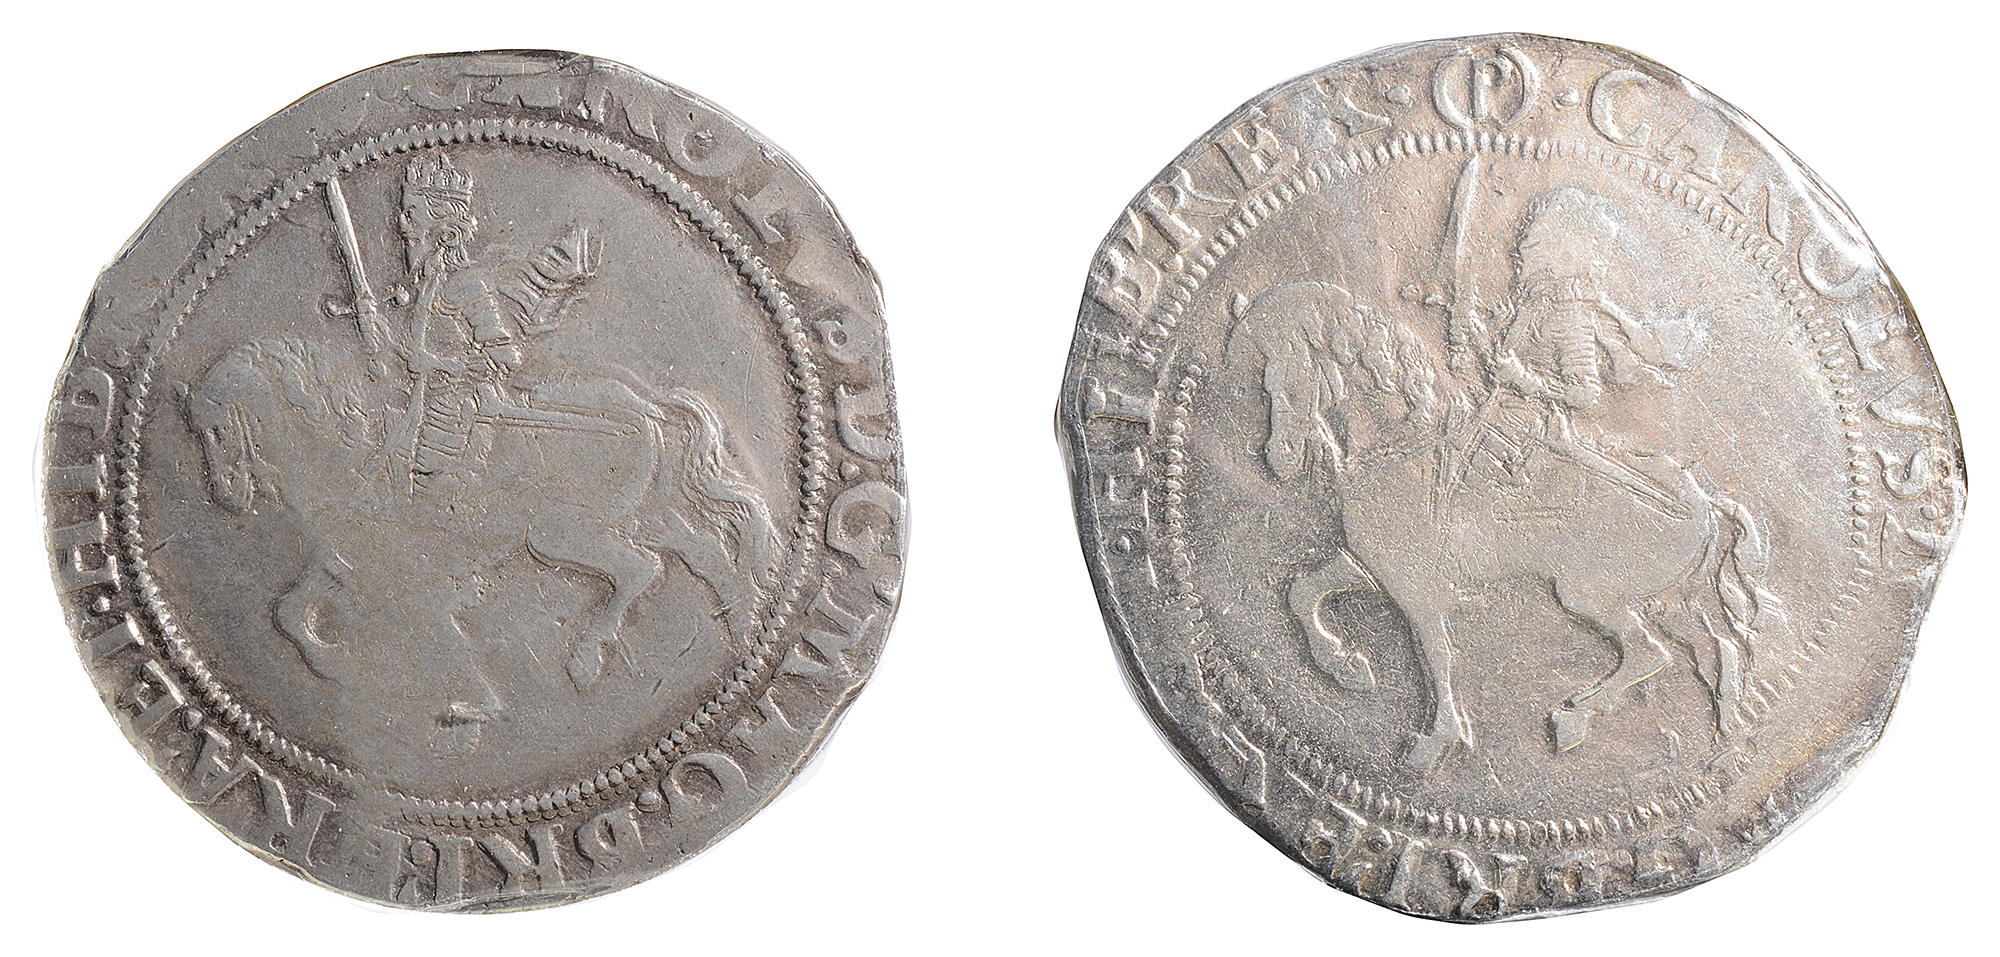 Charles I (1625-49) silver half crownsfirst CAROLVS G MAG BRT FRA ET HIB REX, Charles I, crowned &